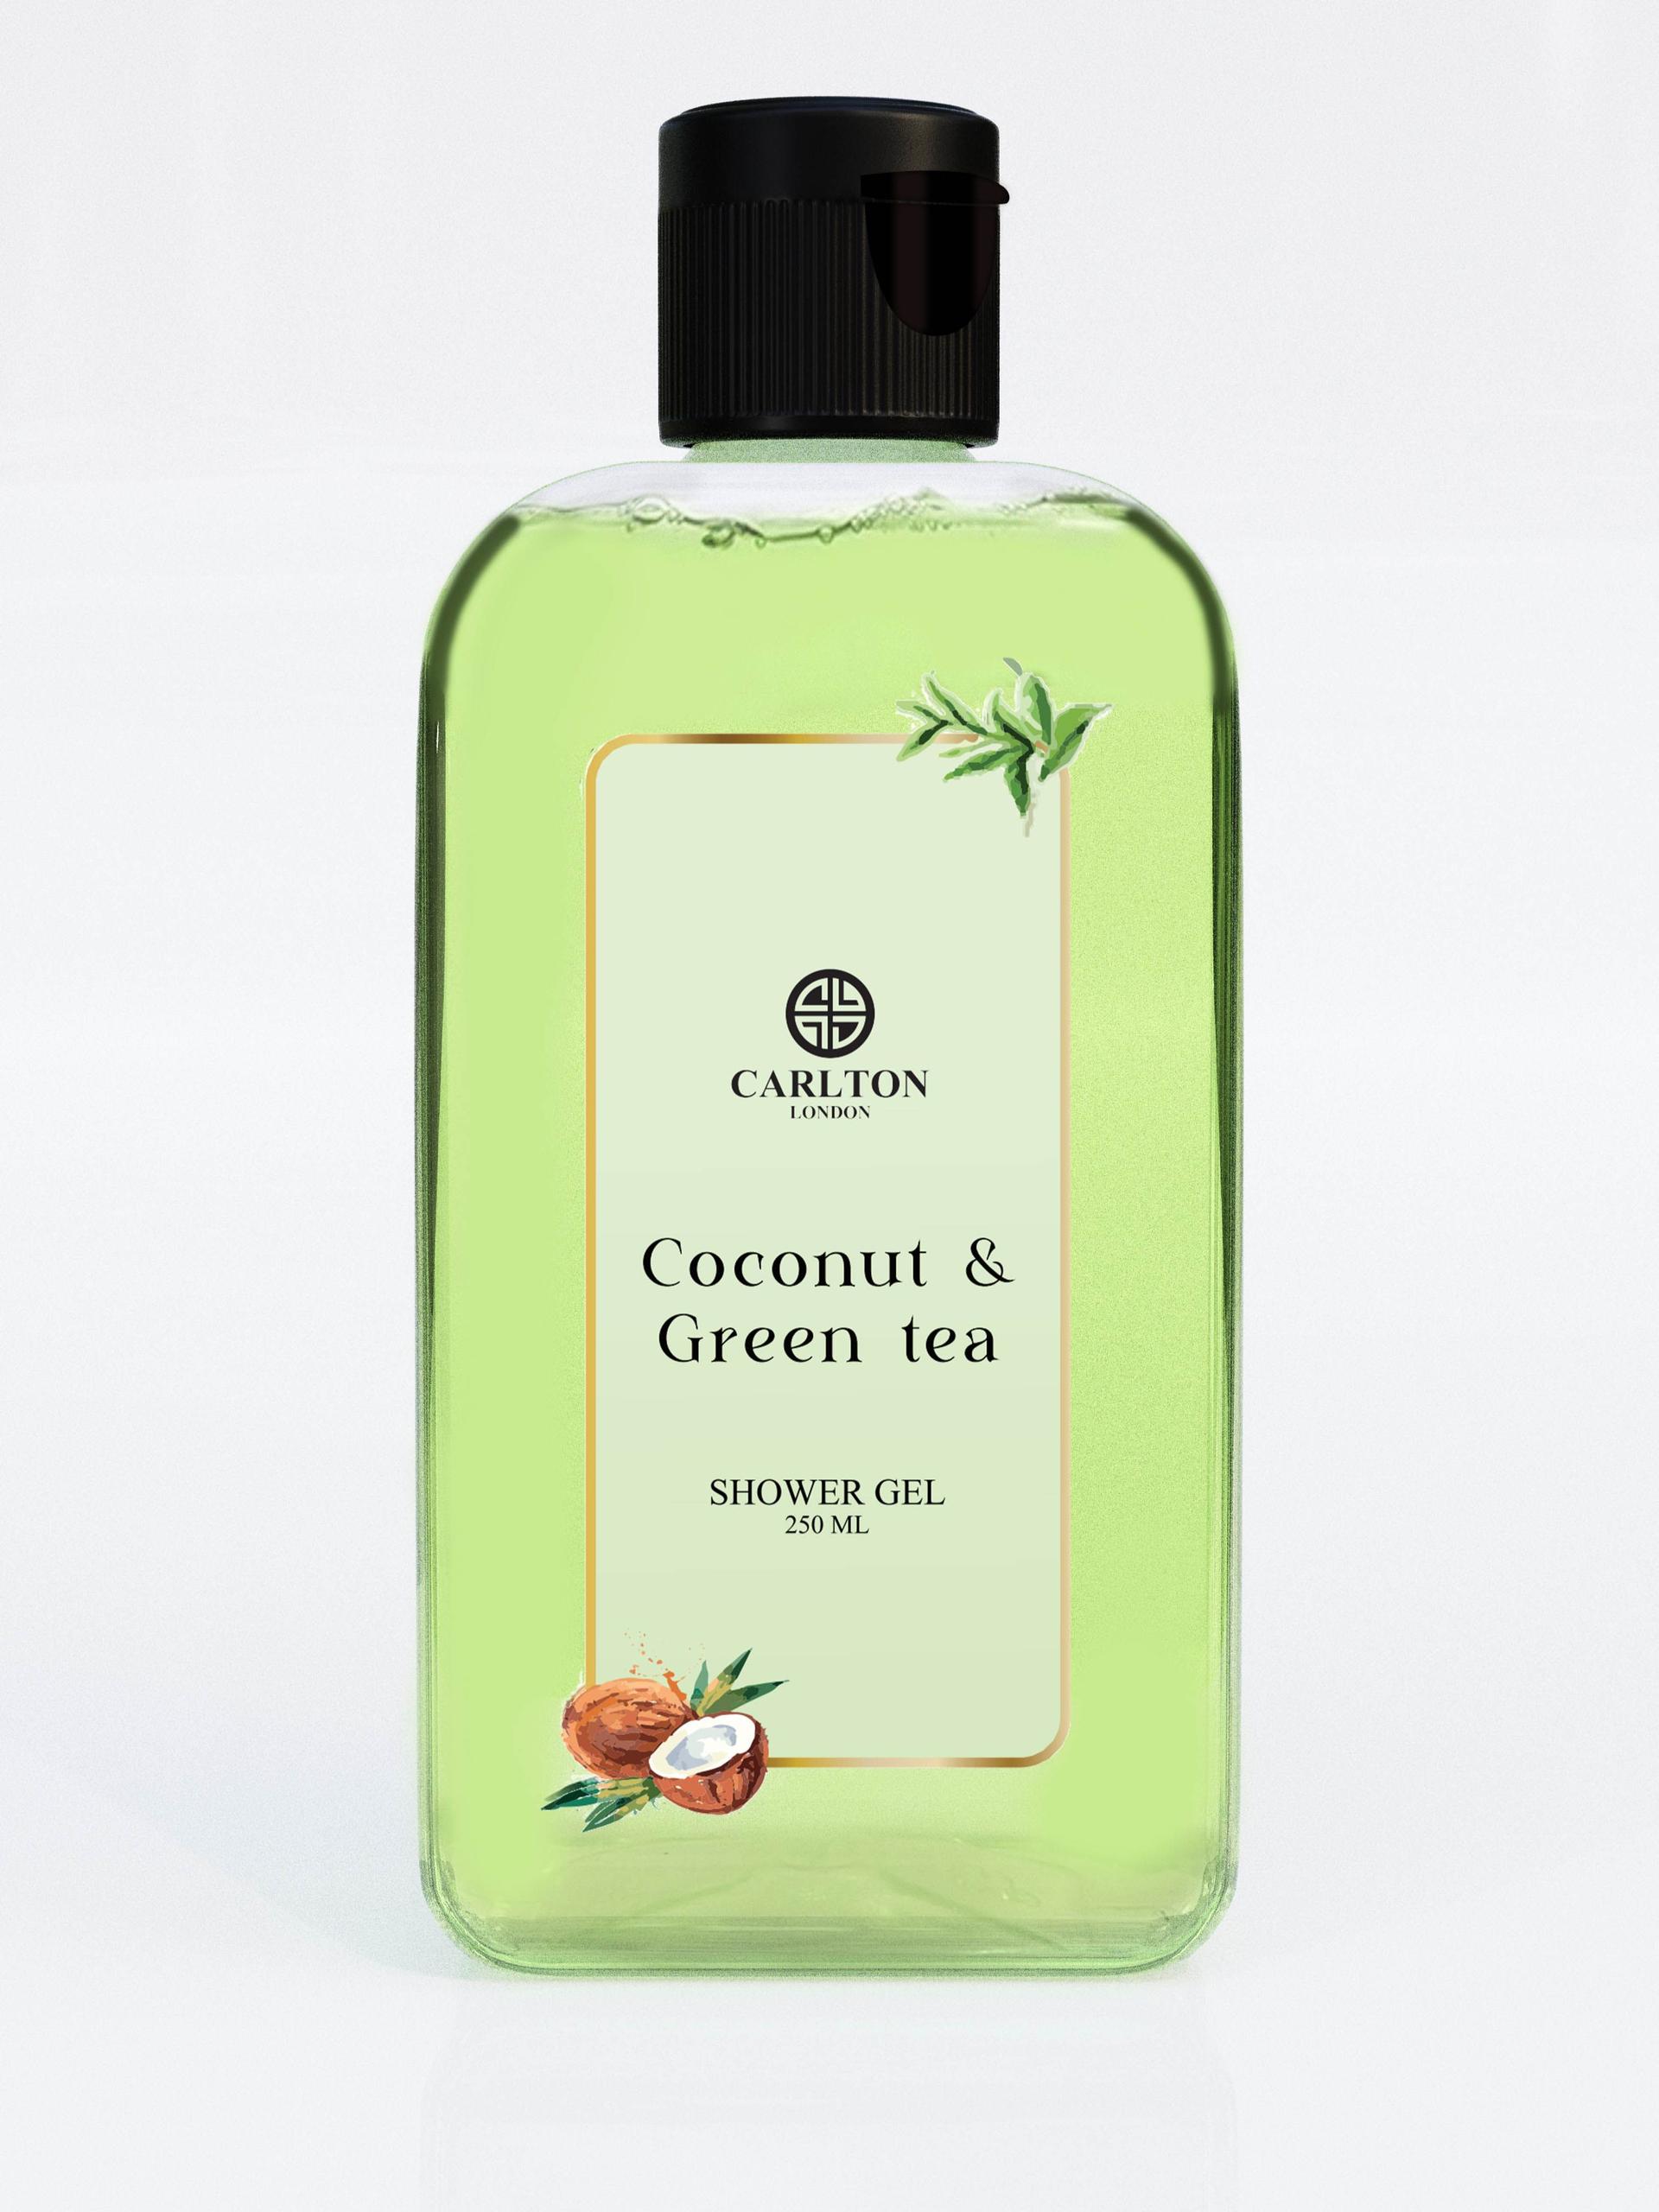 carlton london coconut & green tea fragrance soft & fresh shower gel - 250ml